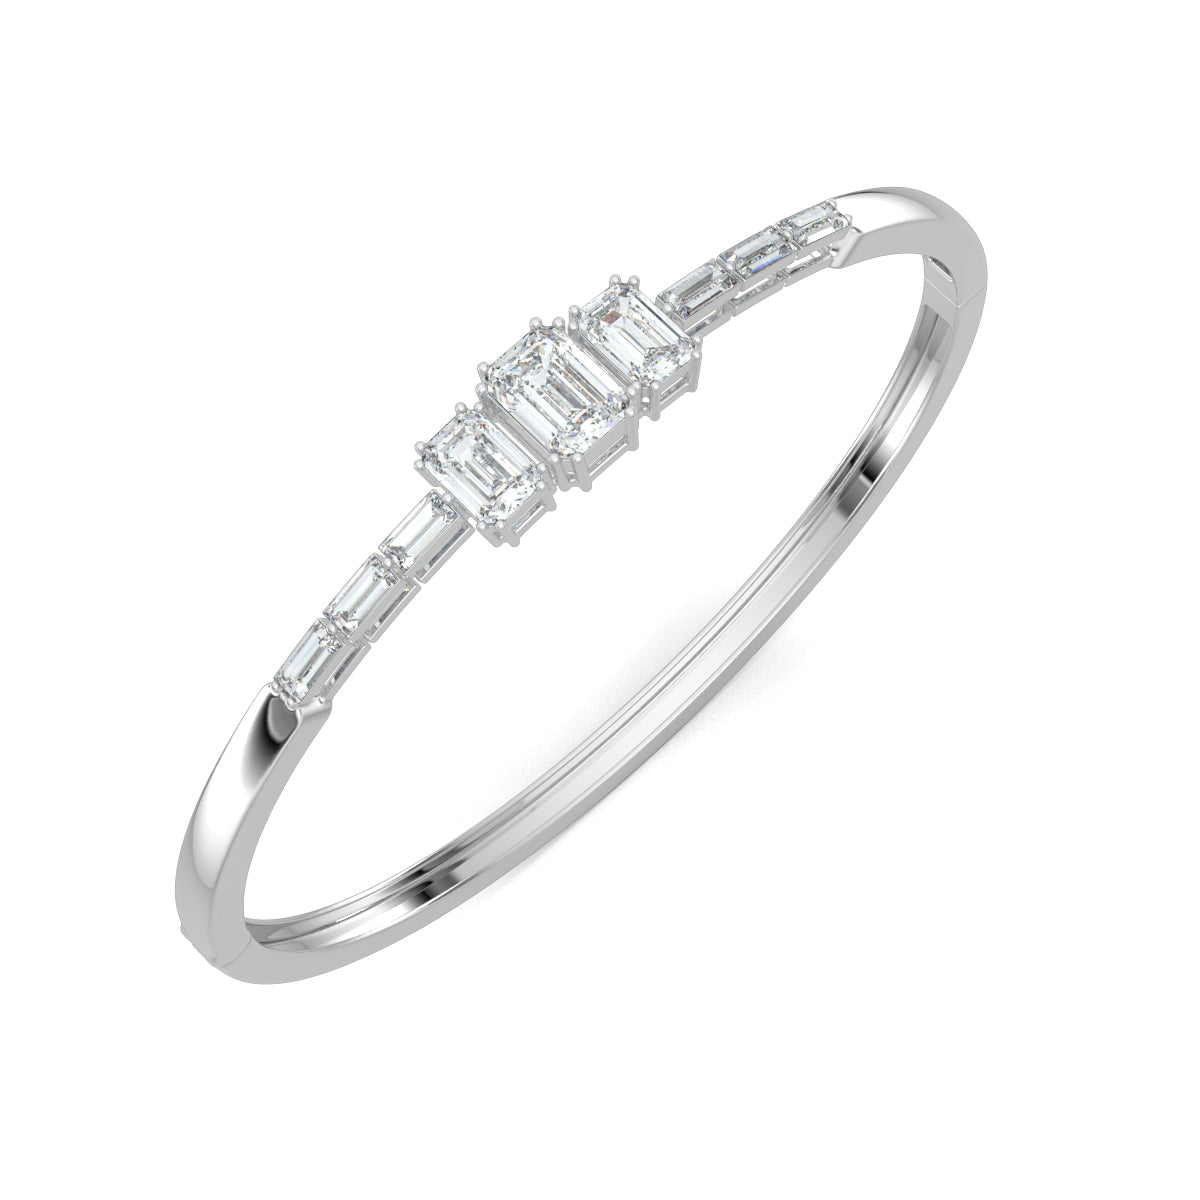 White Gold, Diamond Bracelet, natural diamonds, lab-grown diamonds, oval bracelet, emerald diamond, baguette diamonds, opulent jewelry, luxury bracelet